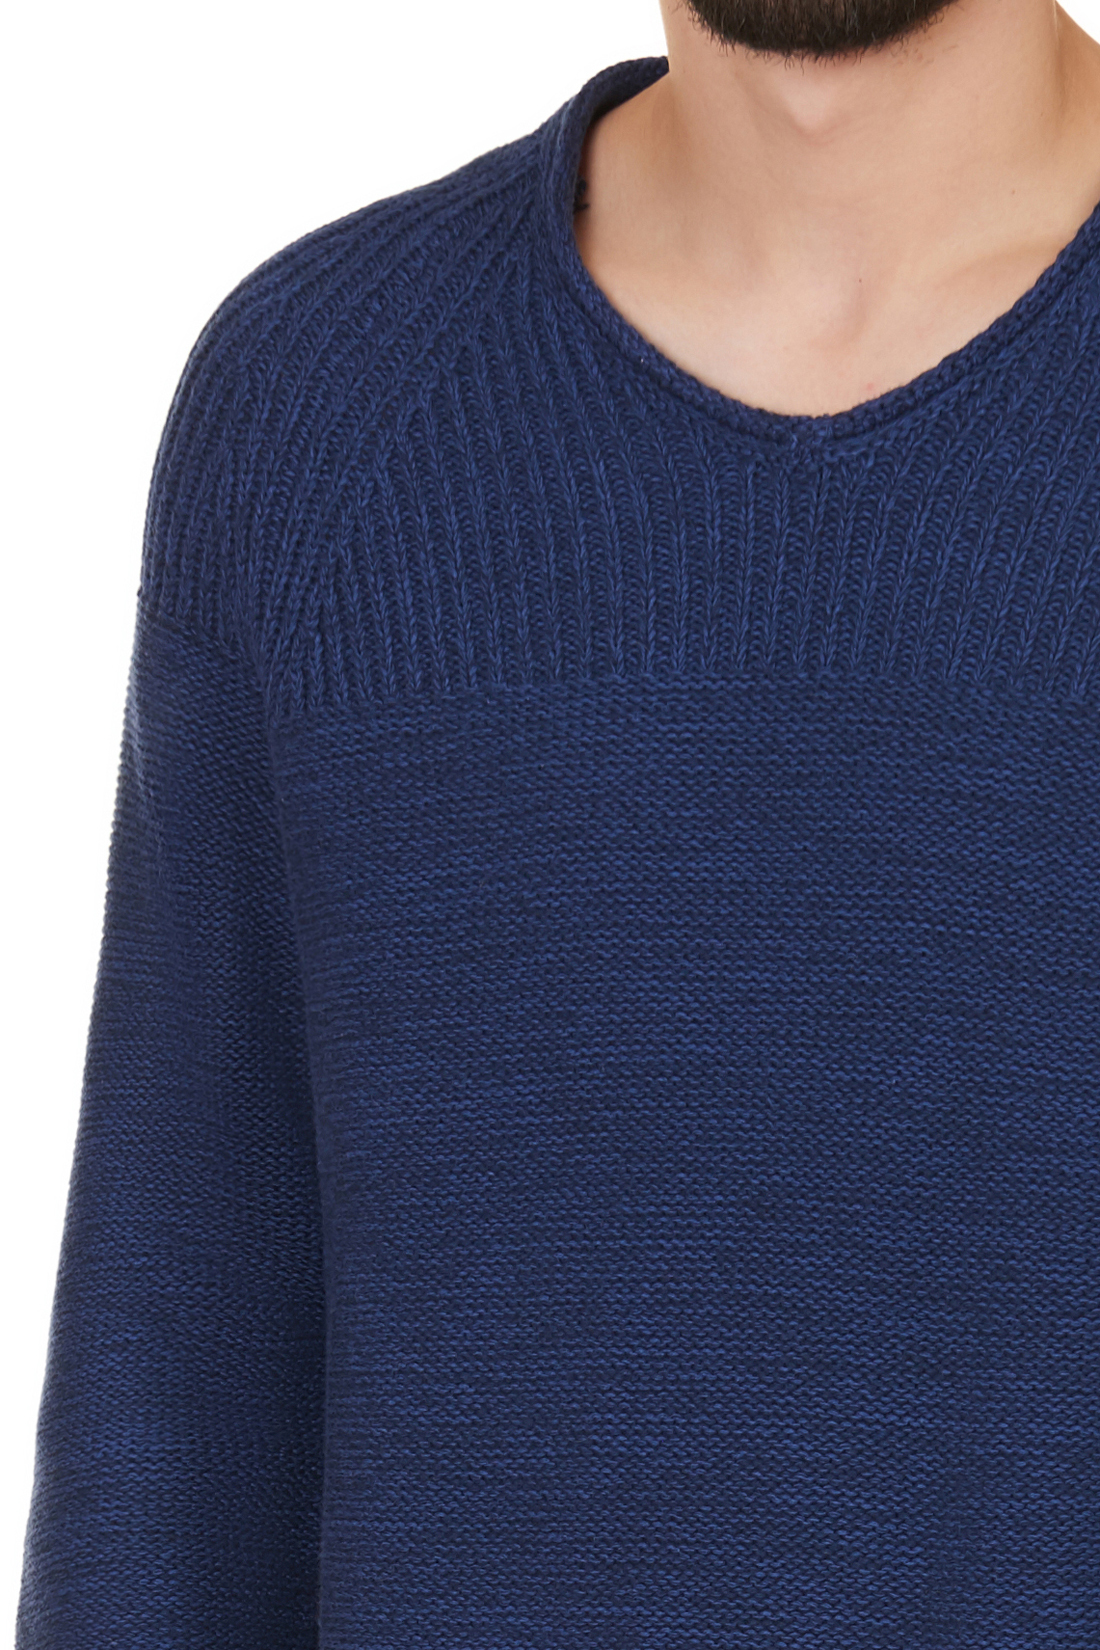 Пуловер из хлопка (арт. baon B637520), размер XXL, цвет deep navy melange#синий Пуловер из хлопка (арт. baon B637520) - фото 4